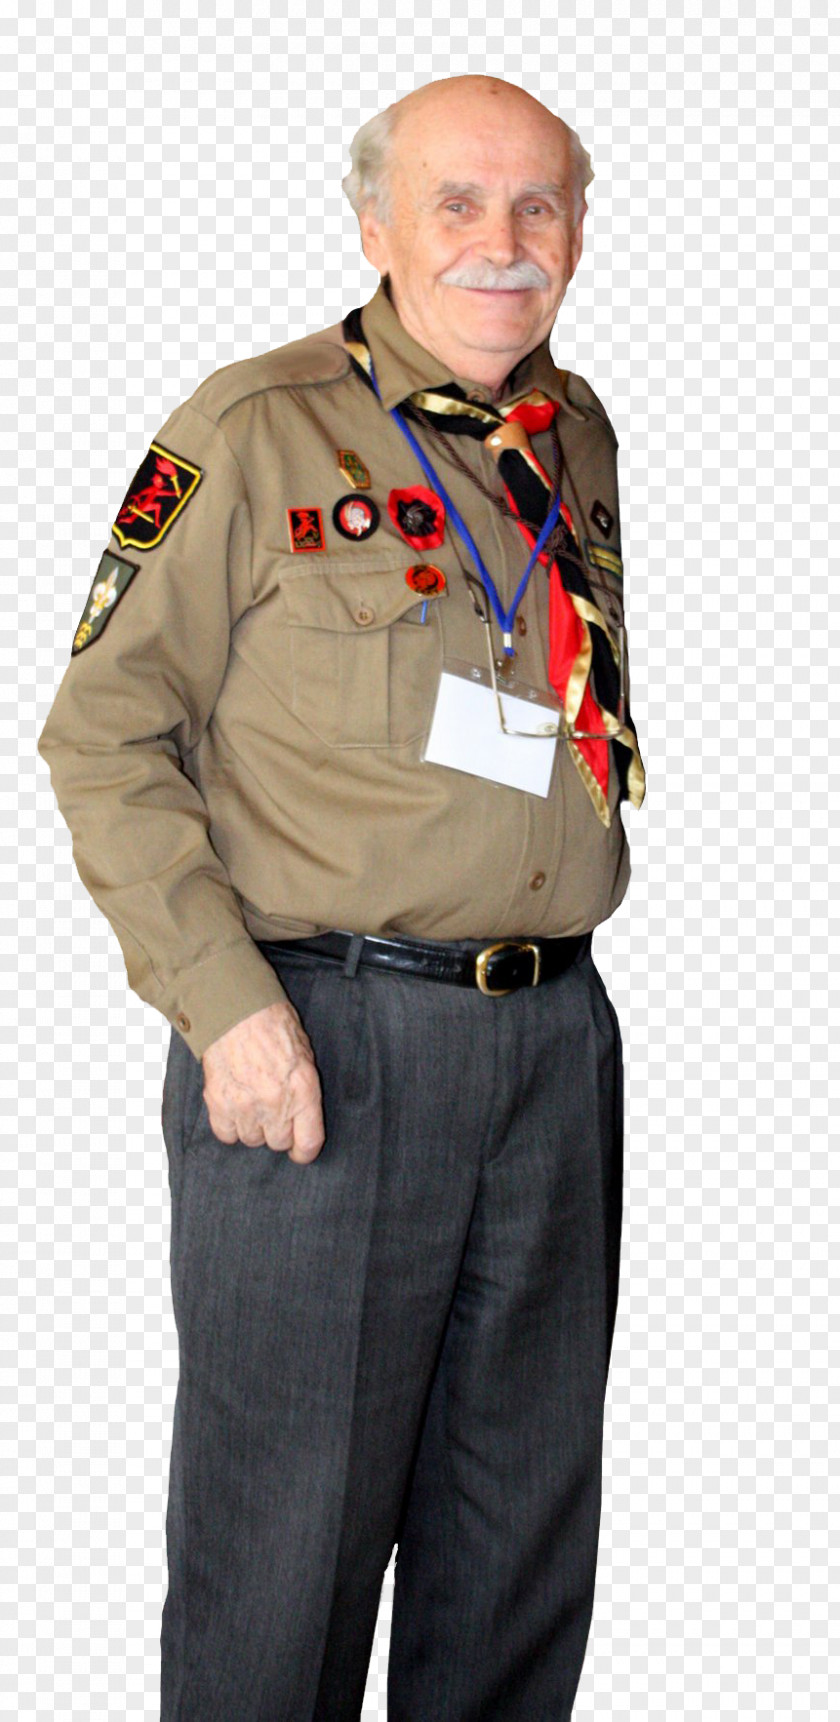 Scout Outerwear Military Uniform Jacket Profession PNG